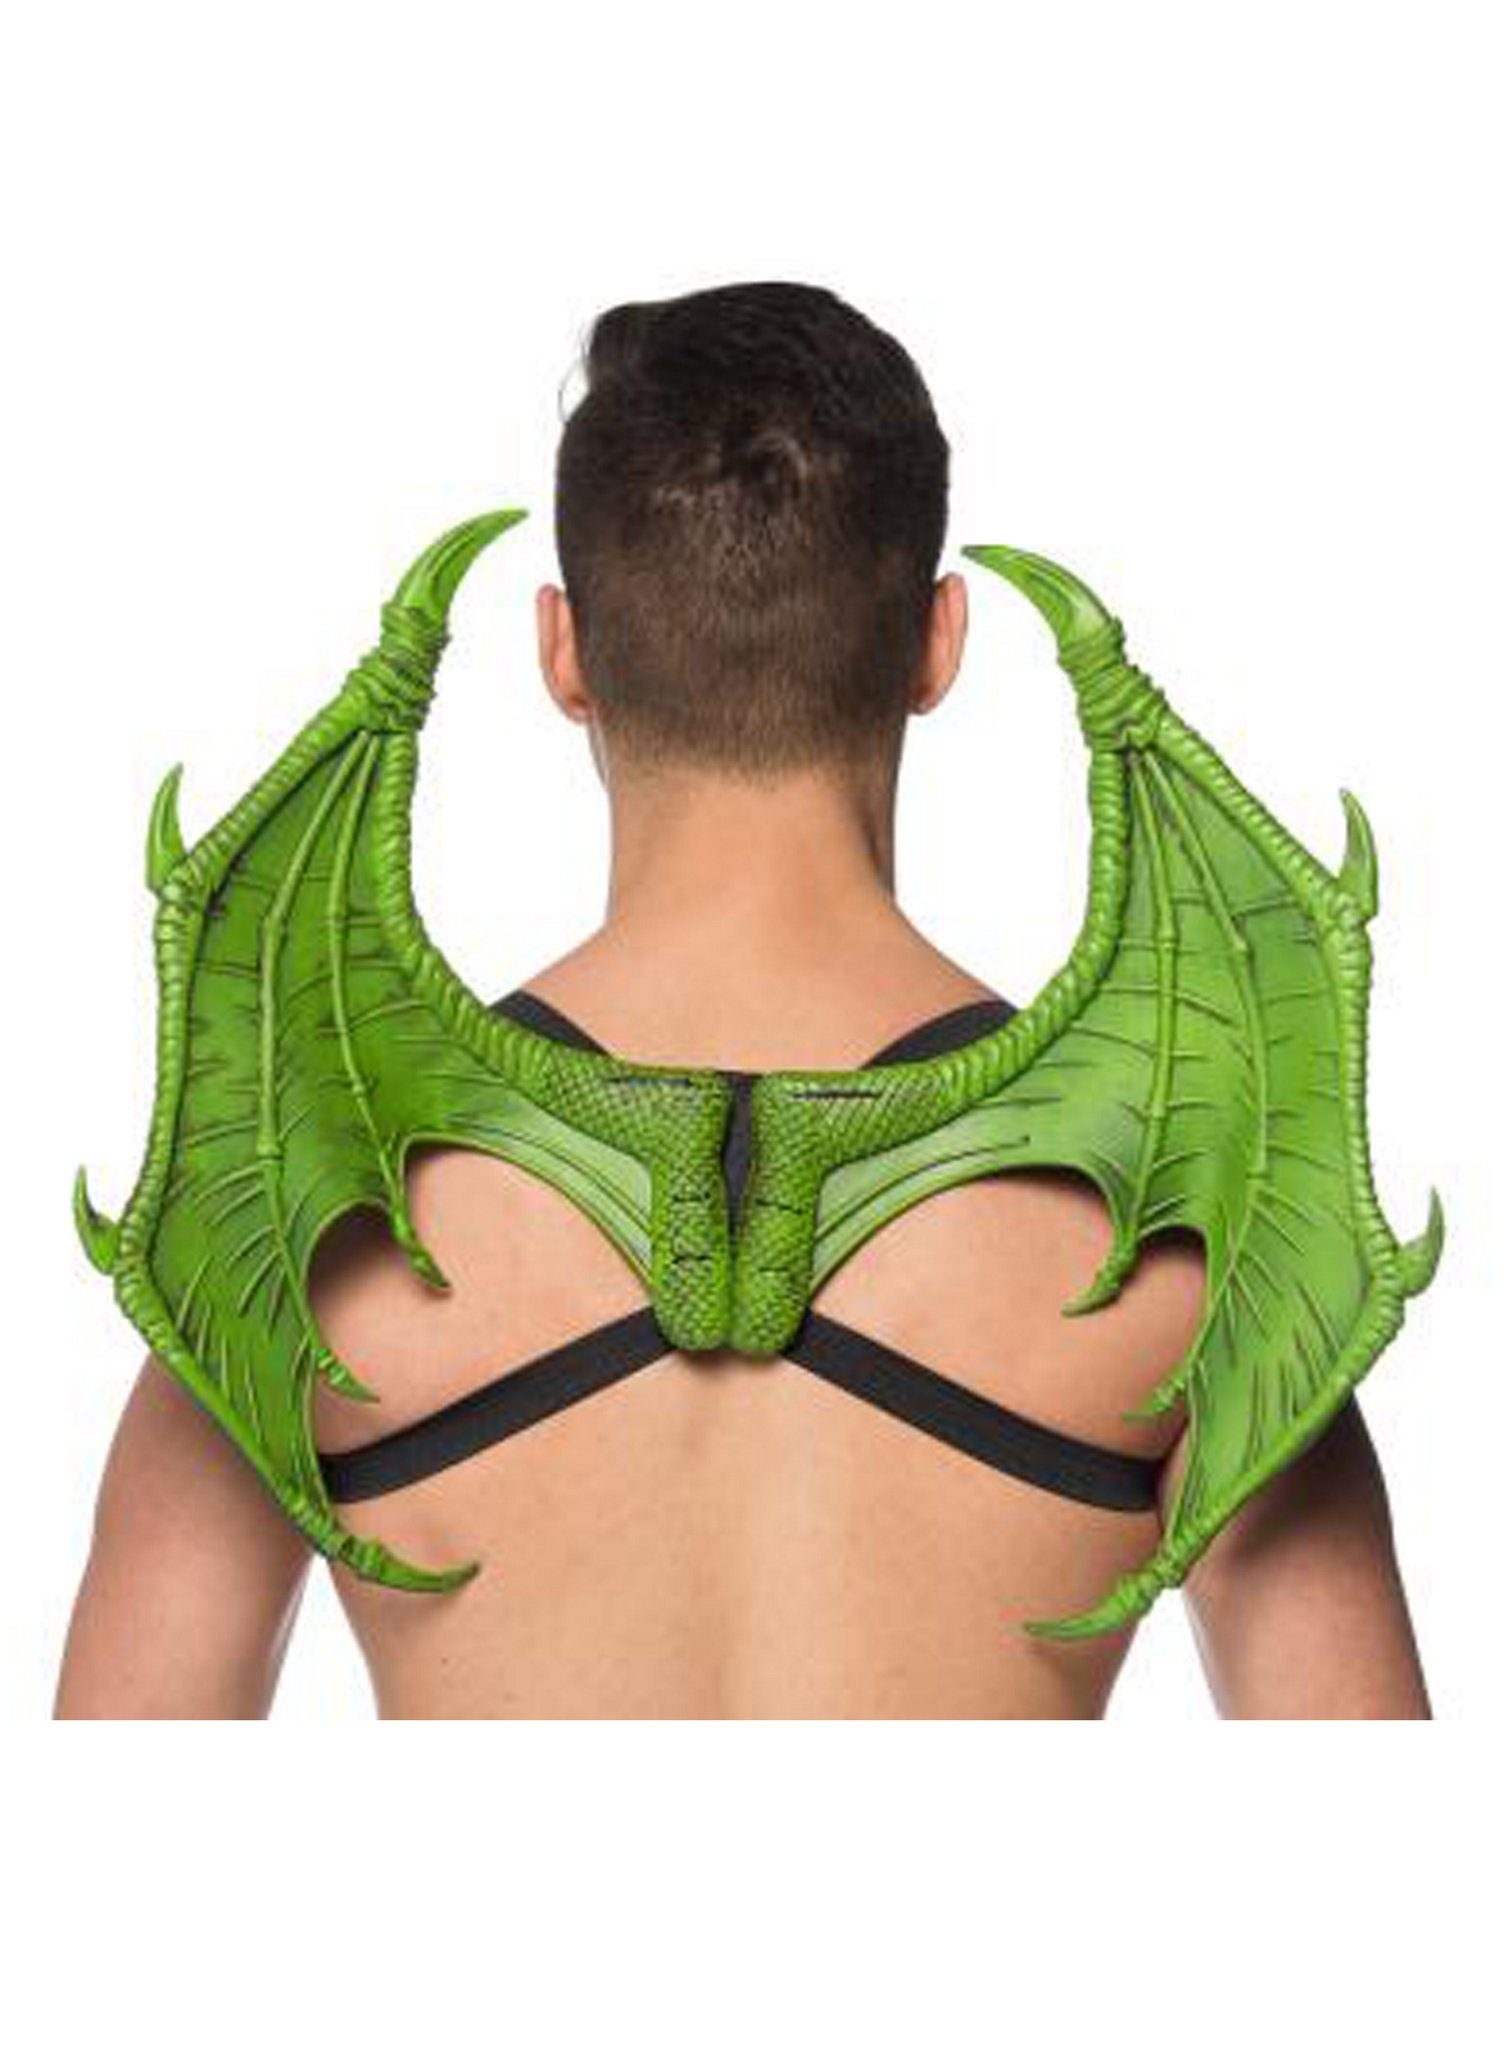 Metamorph Kostüm-Flügel Drachenflügel grün, Latex-Accessoire zum Umbinden